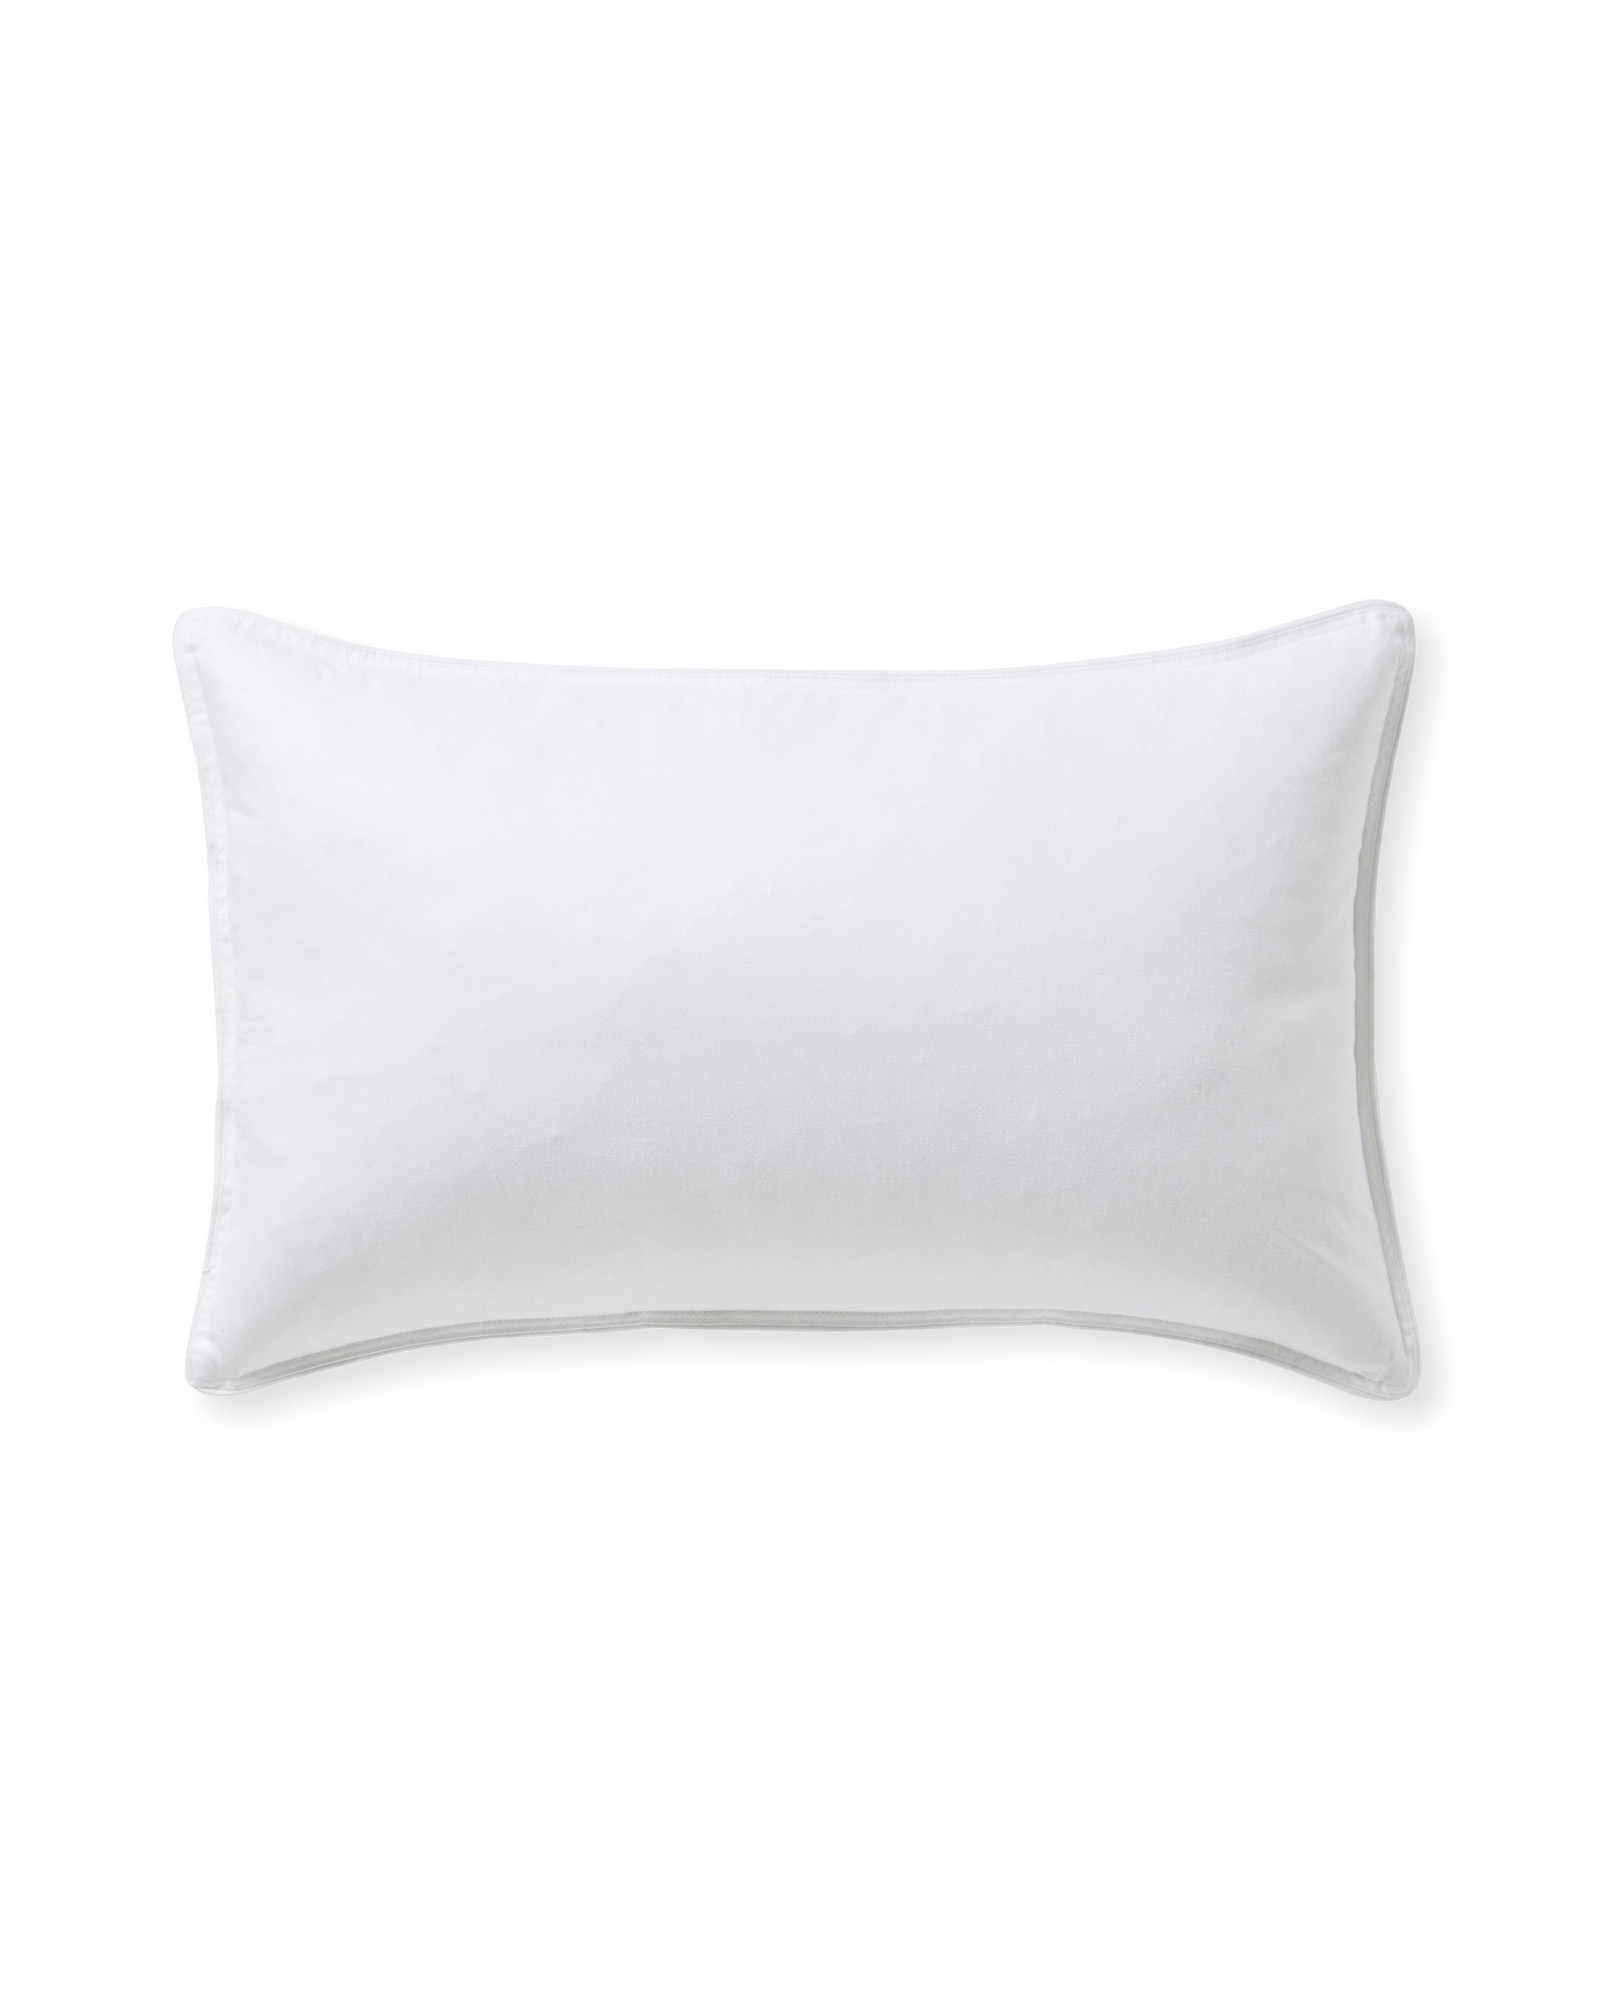 Pillow Insert - 12X18 - Image 0